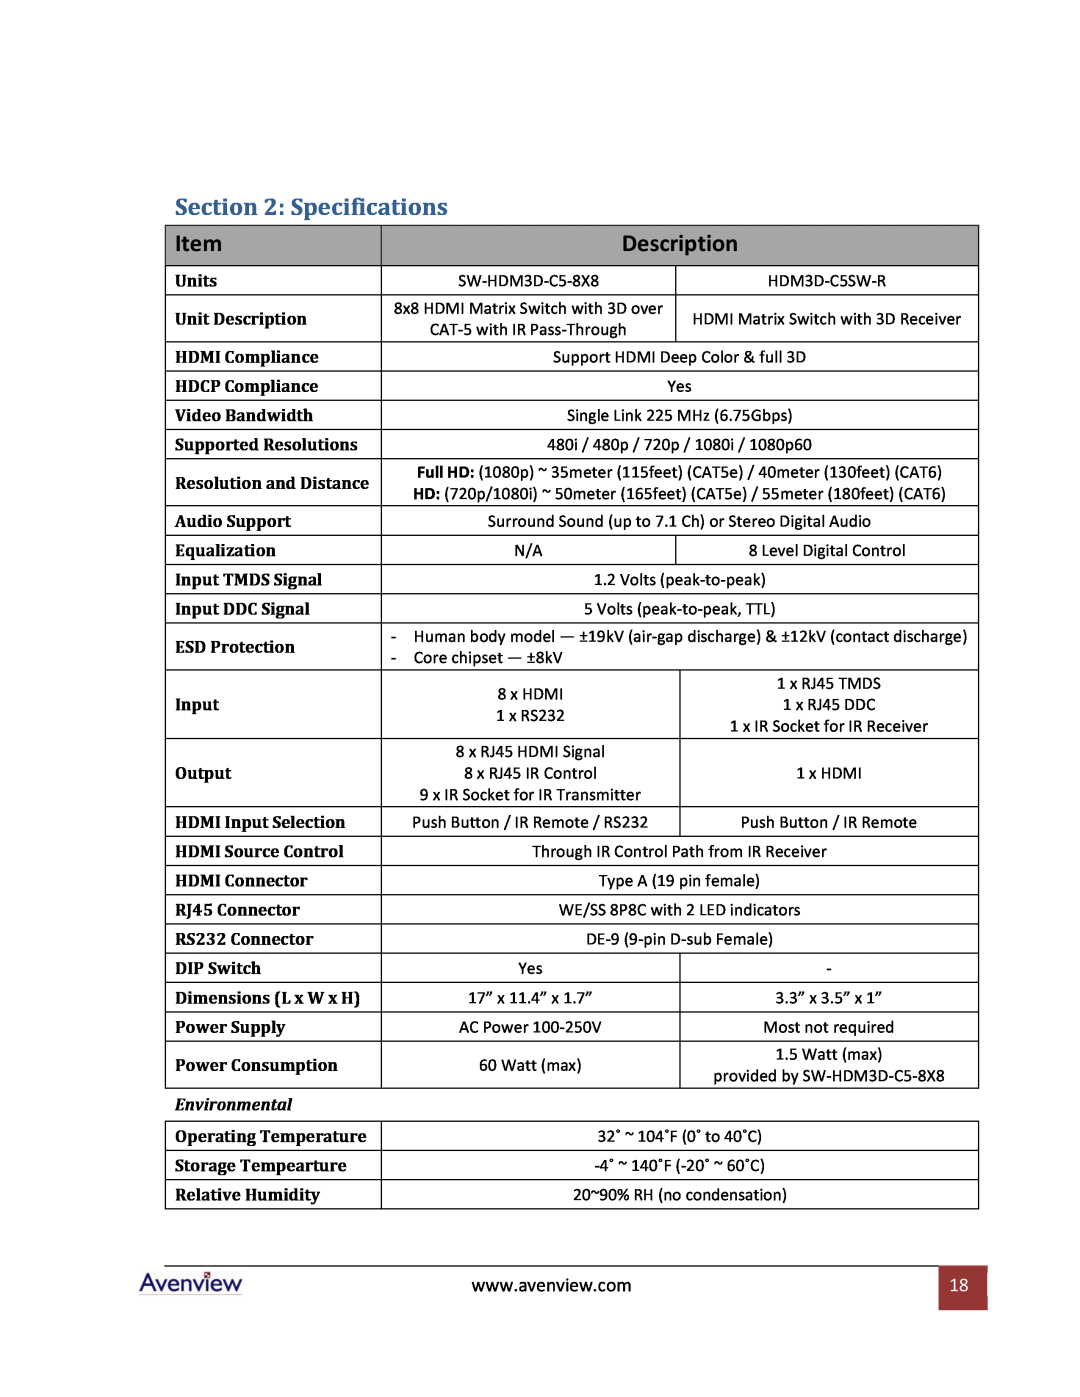 Avenview SW-HDM3D-C5-8X8 specifications Specifications, Description, Environmental 